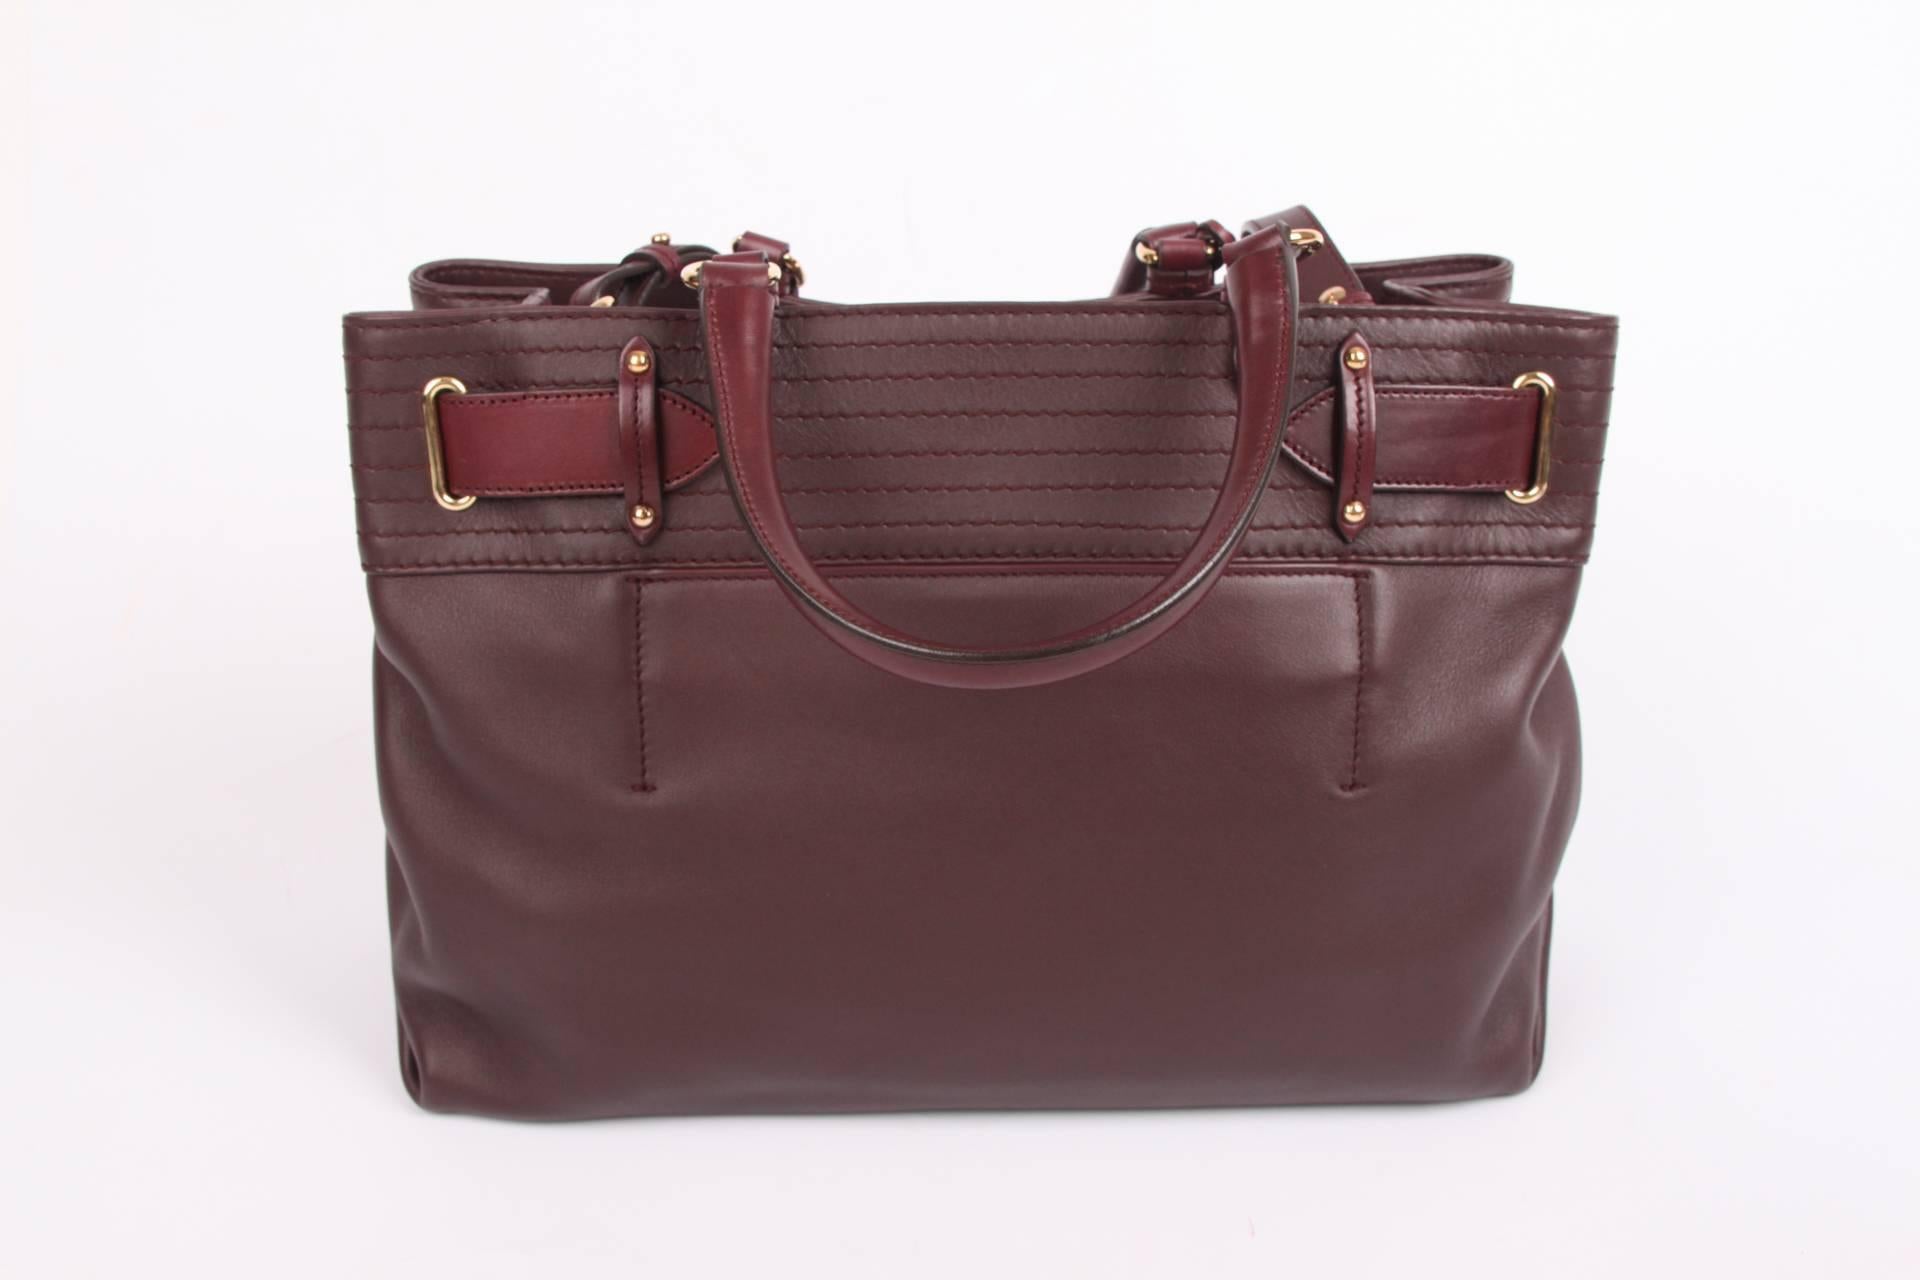 Red Salvatore Ferragamo Leather Buckled Tote Bag Visone - burgundy red